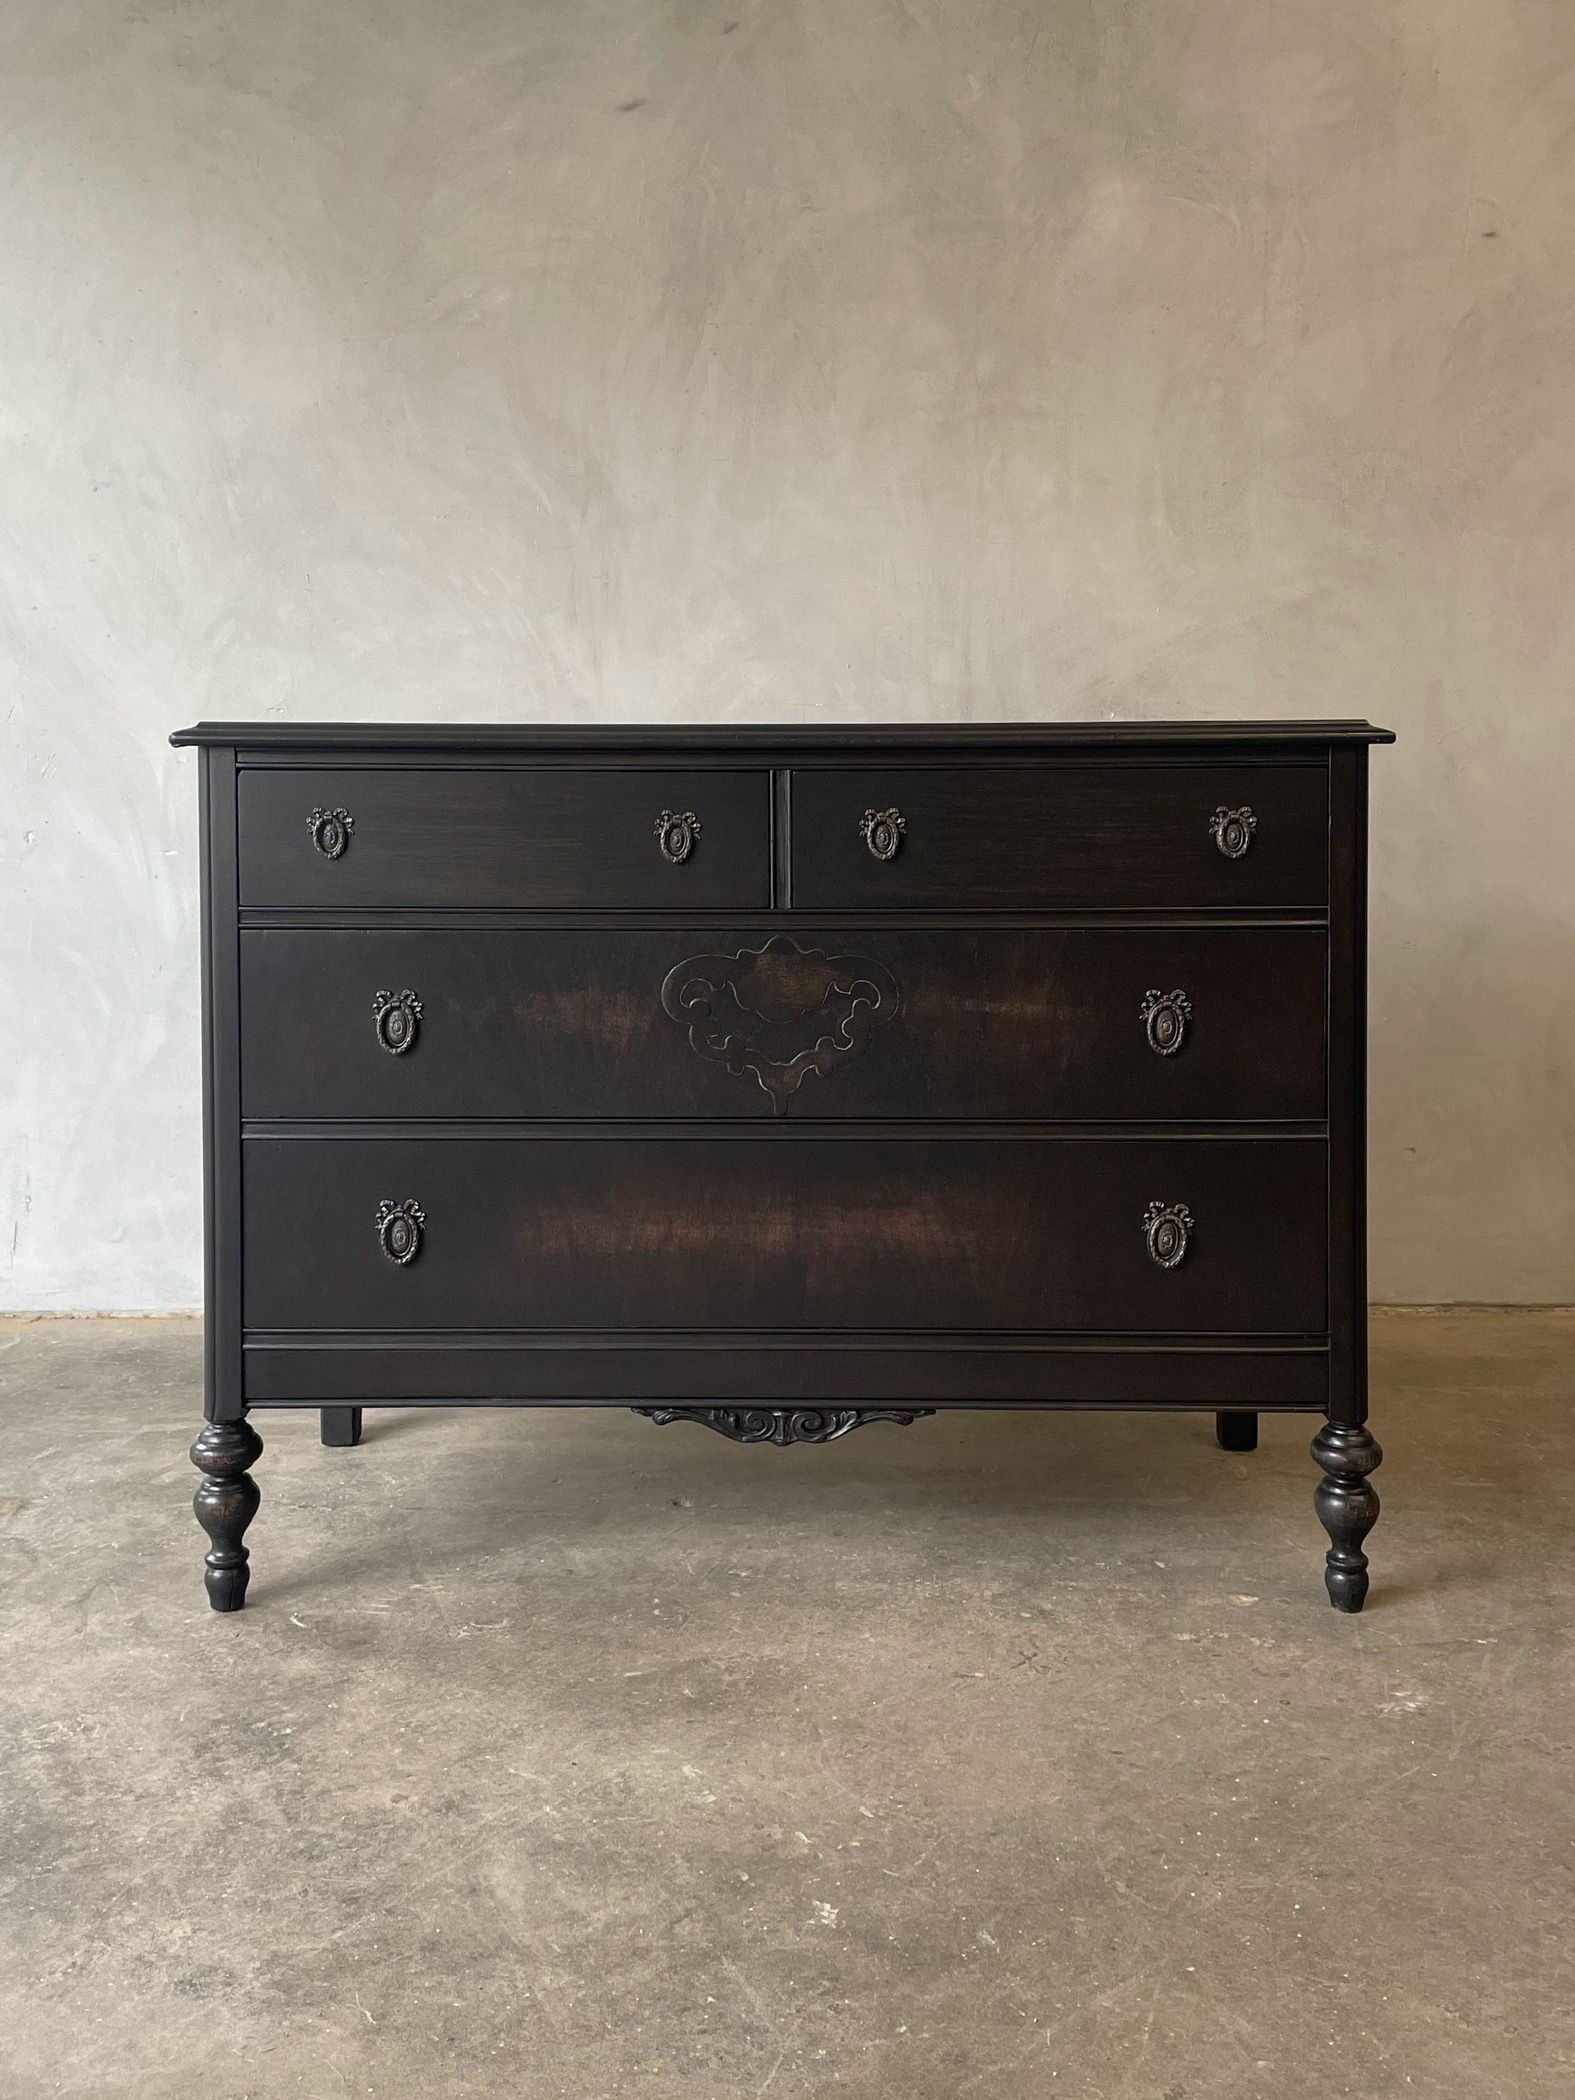 LA Furniture Co. Antique Cabinet 